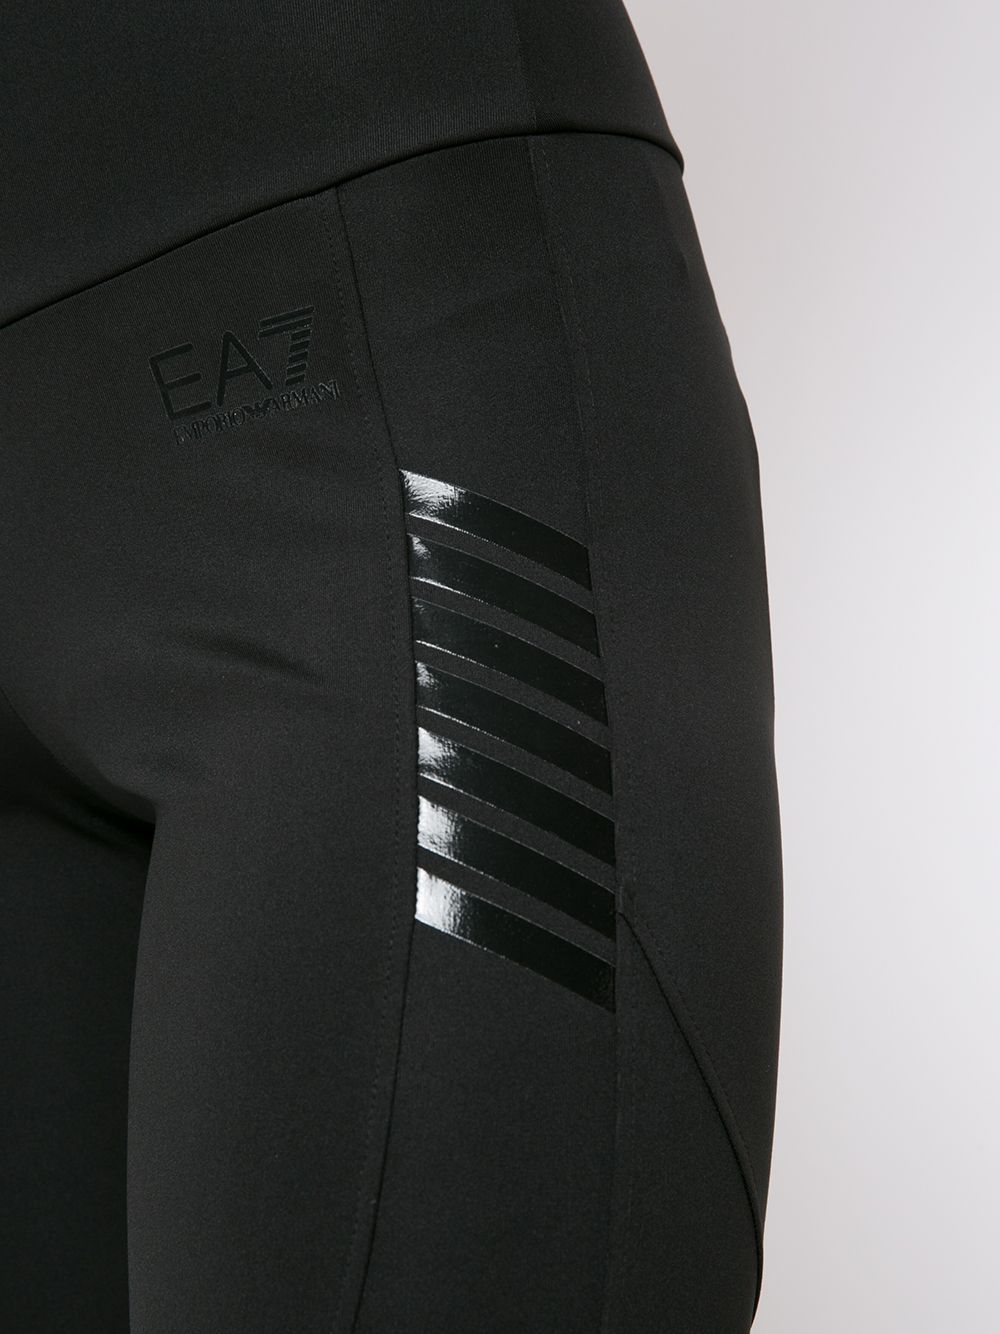 Ea7 Emporio Armani Side Stripe Detail Leggings - Farfetch